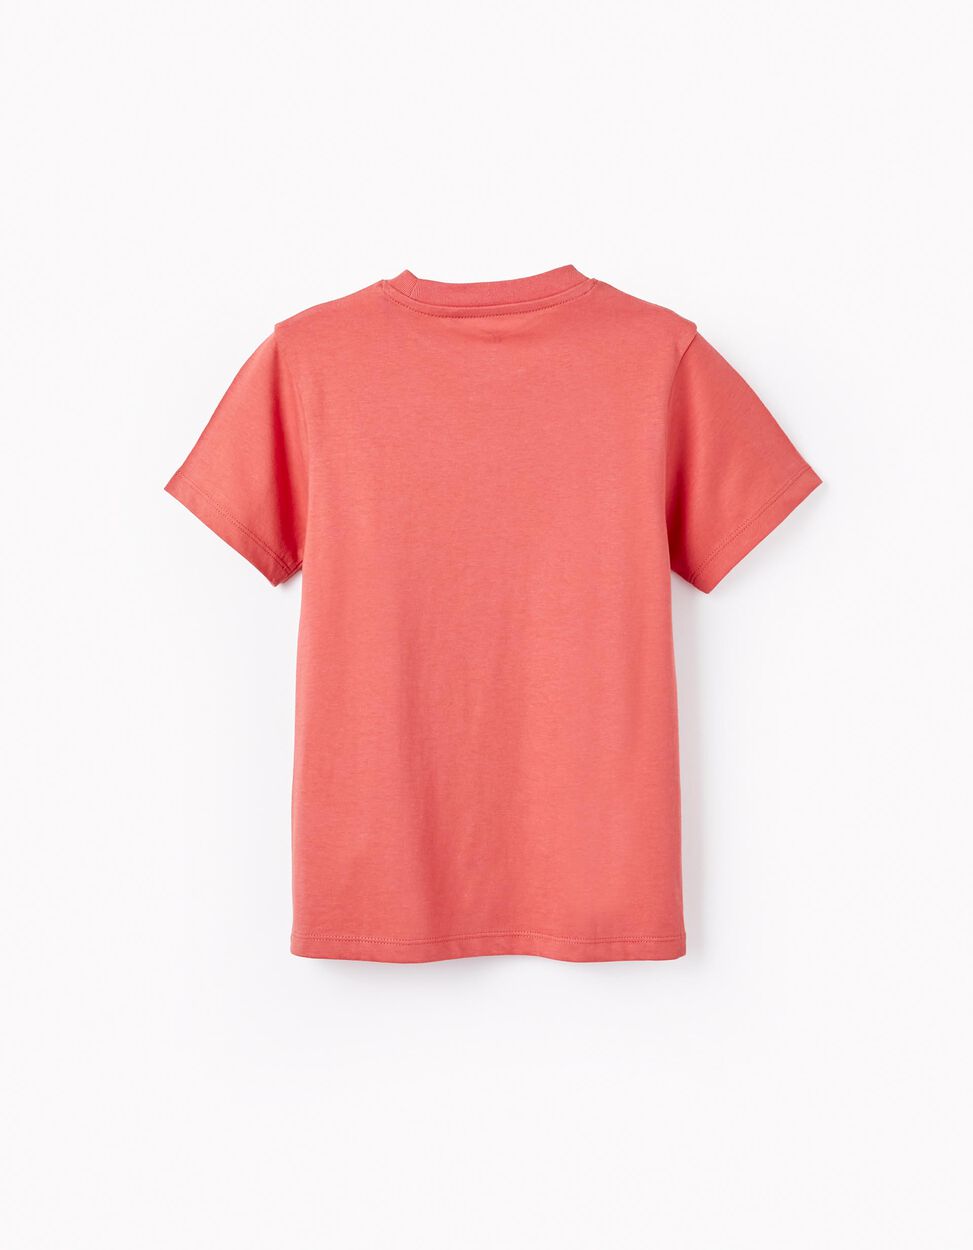 Buy Online Cotton T-shirt for Boys 'Havana', Red